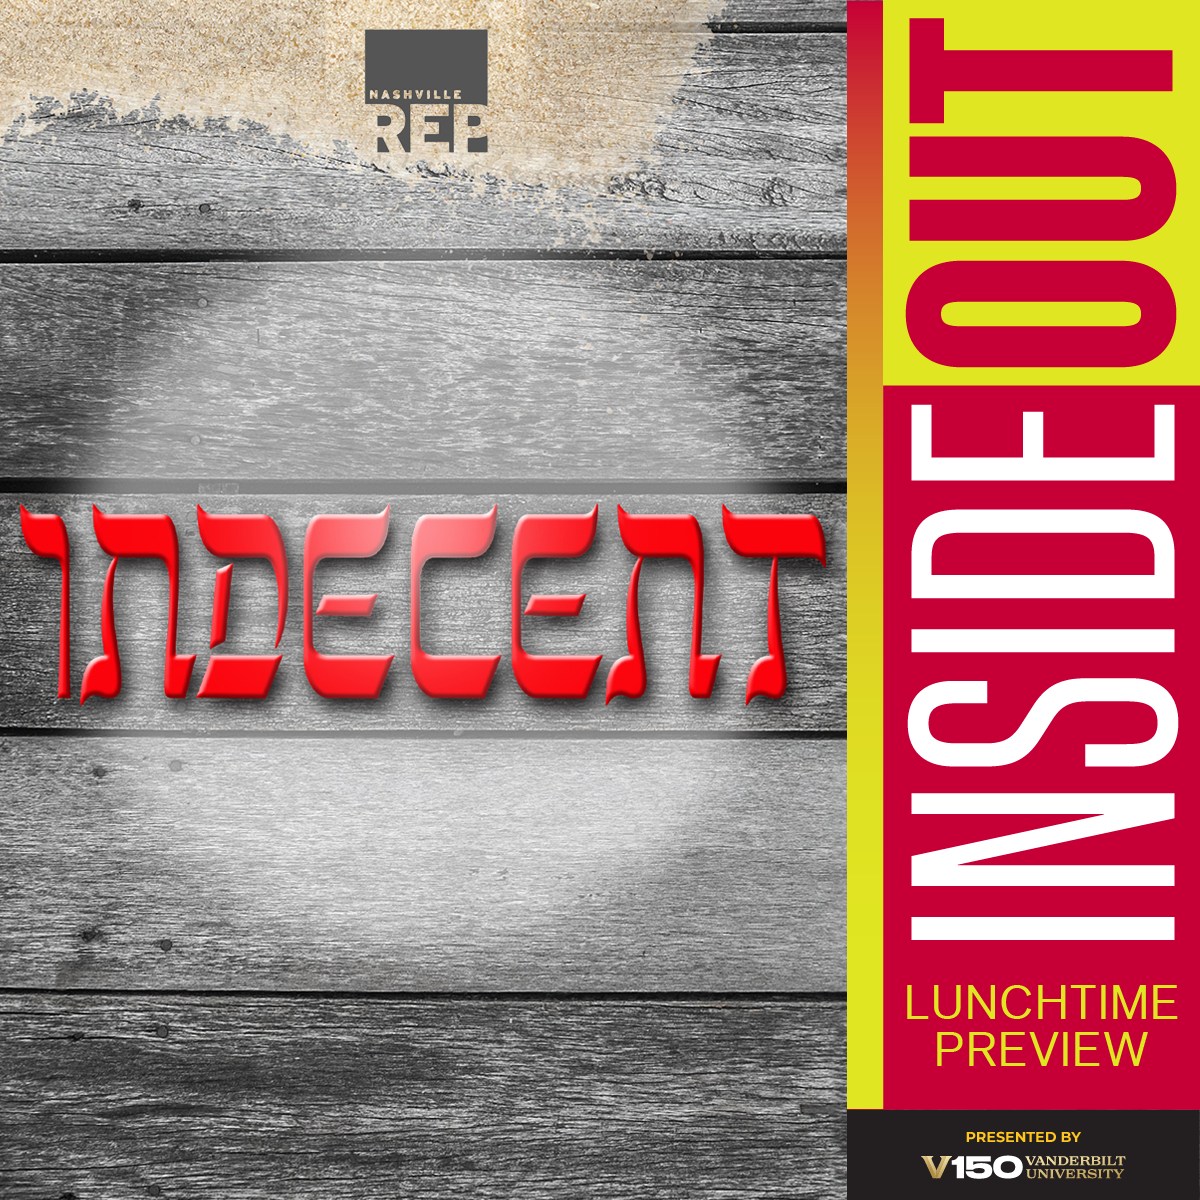 Indecent, InsideOut Lunchtime Preview presented by V150 Vanderbilt University